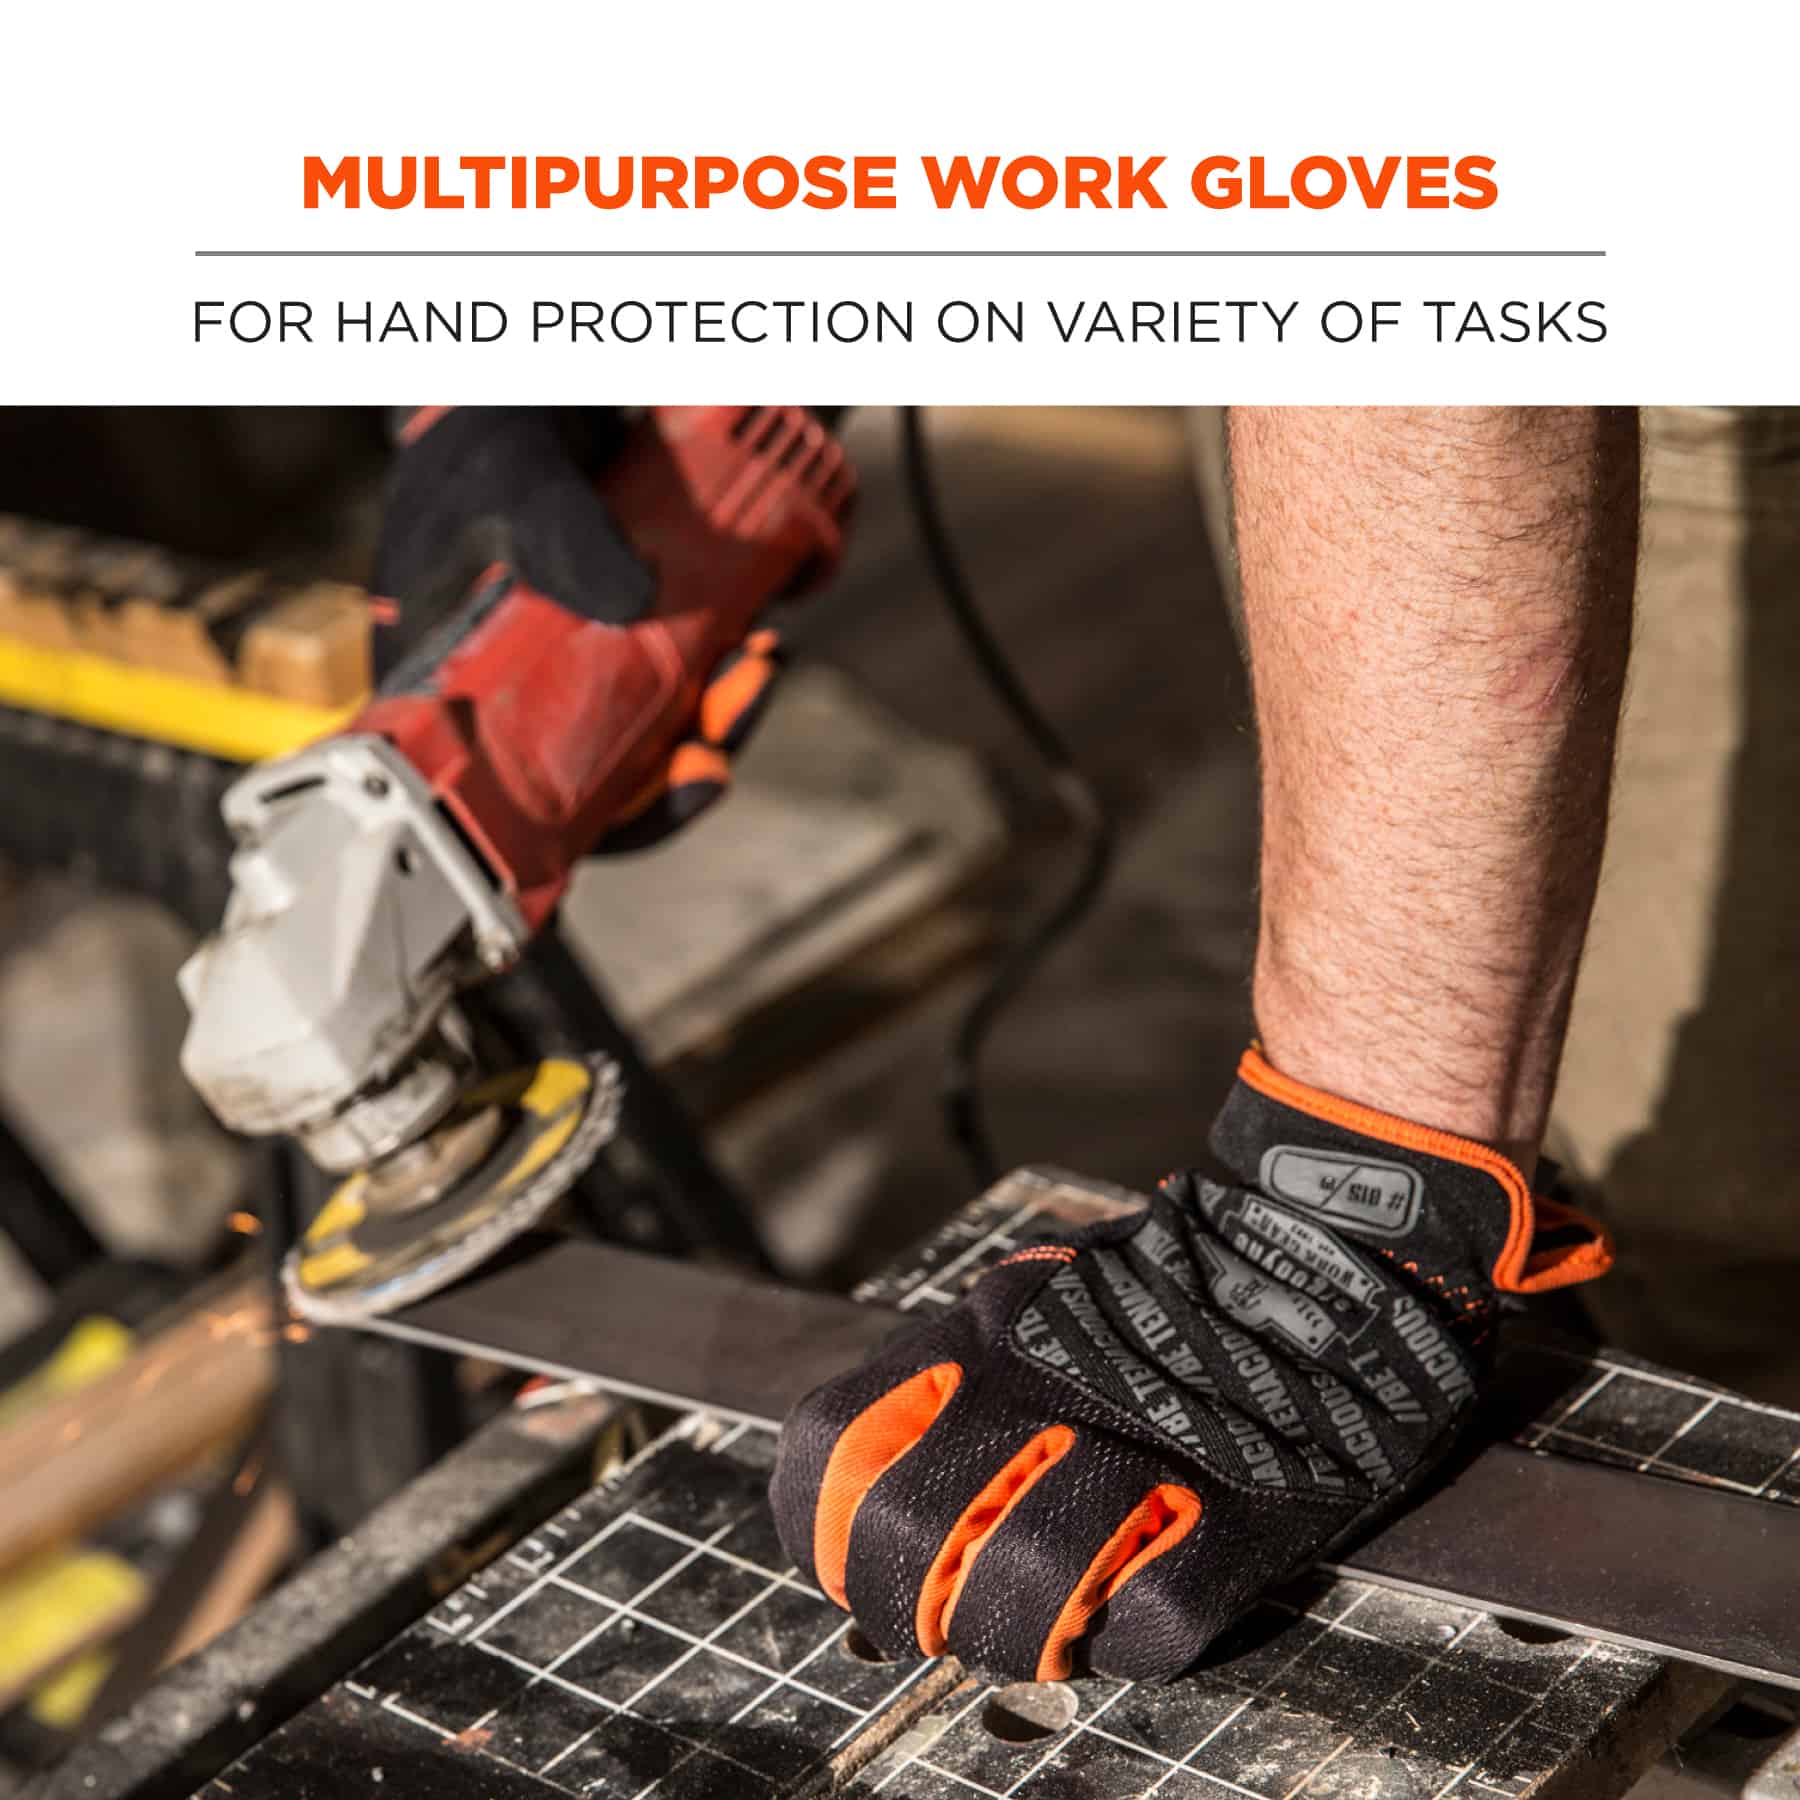 https://www.ergodyne.com/sites/default/files/product-images/17202-815-quickcuff-utility-gloves-multipurpose-work-gloves.jpg